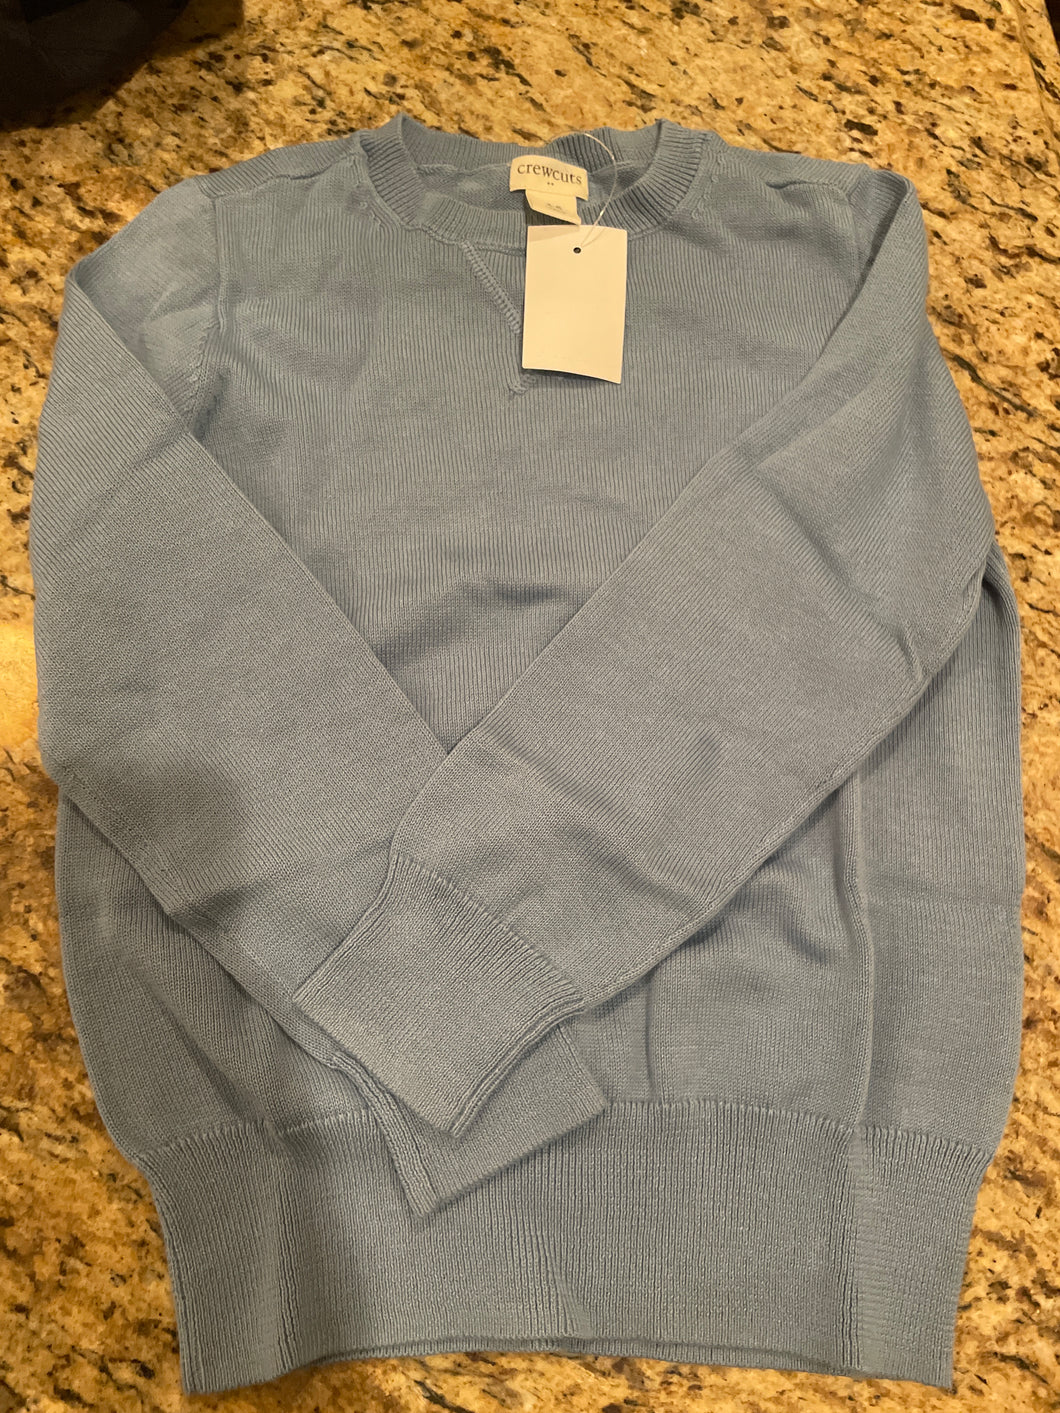 Crewcuts light blue crewneck sweater sz4 new! 4